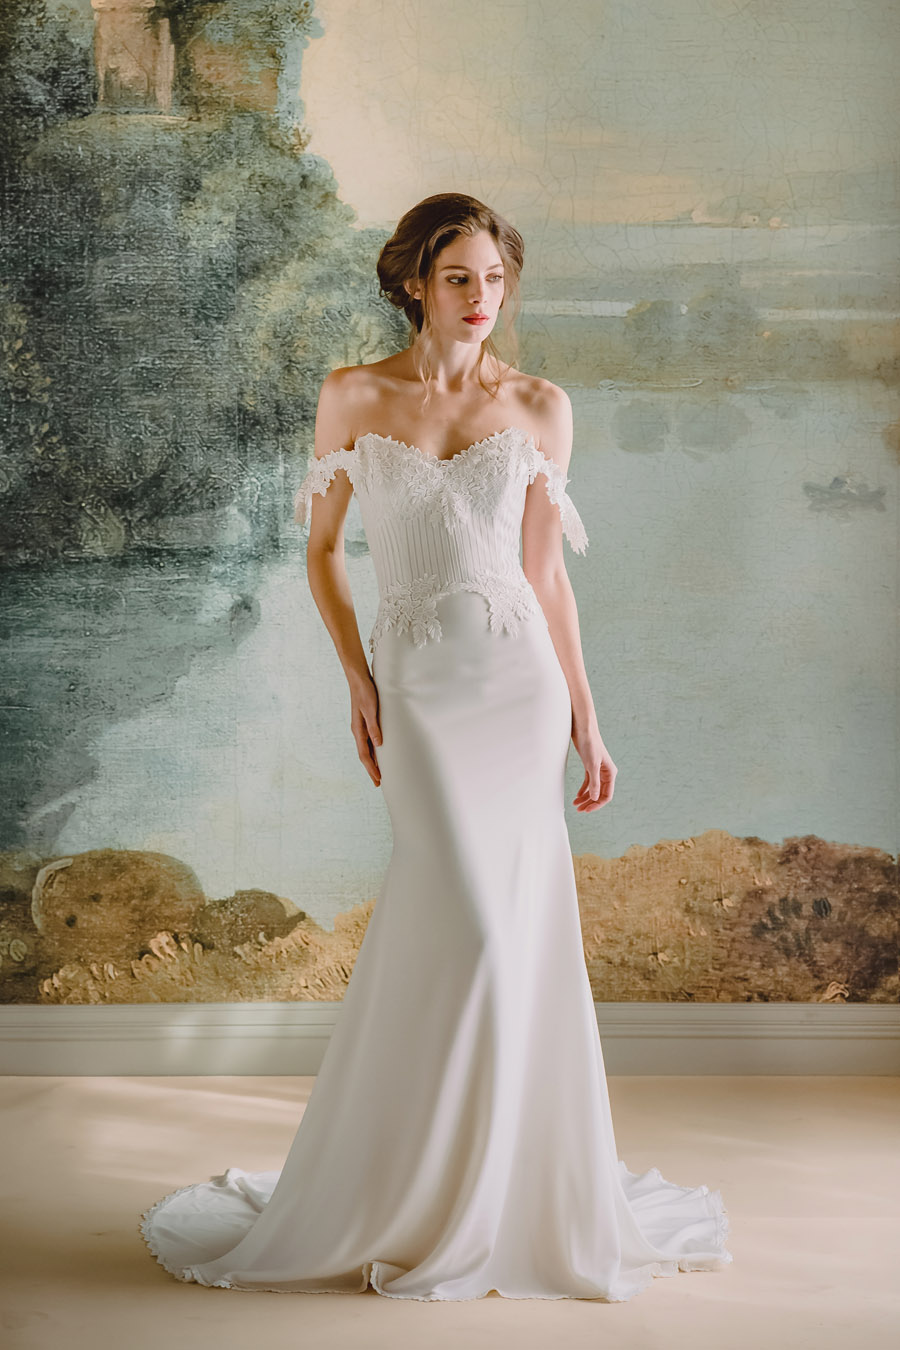 Claire Pettibone 2020 wedding dress ideas (16)